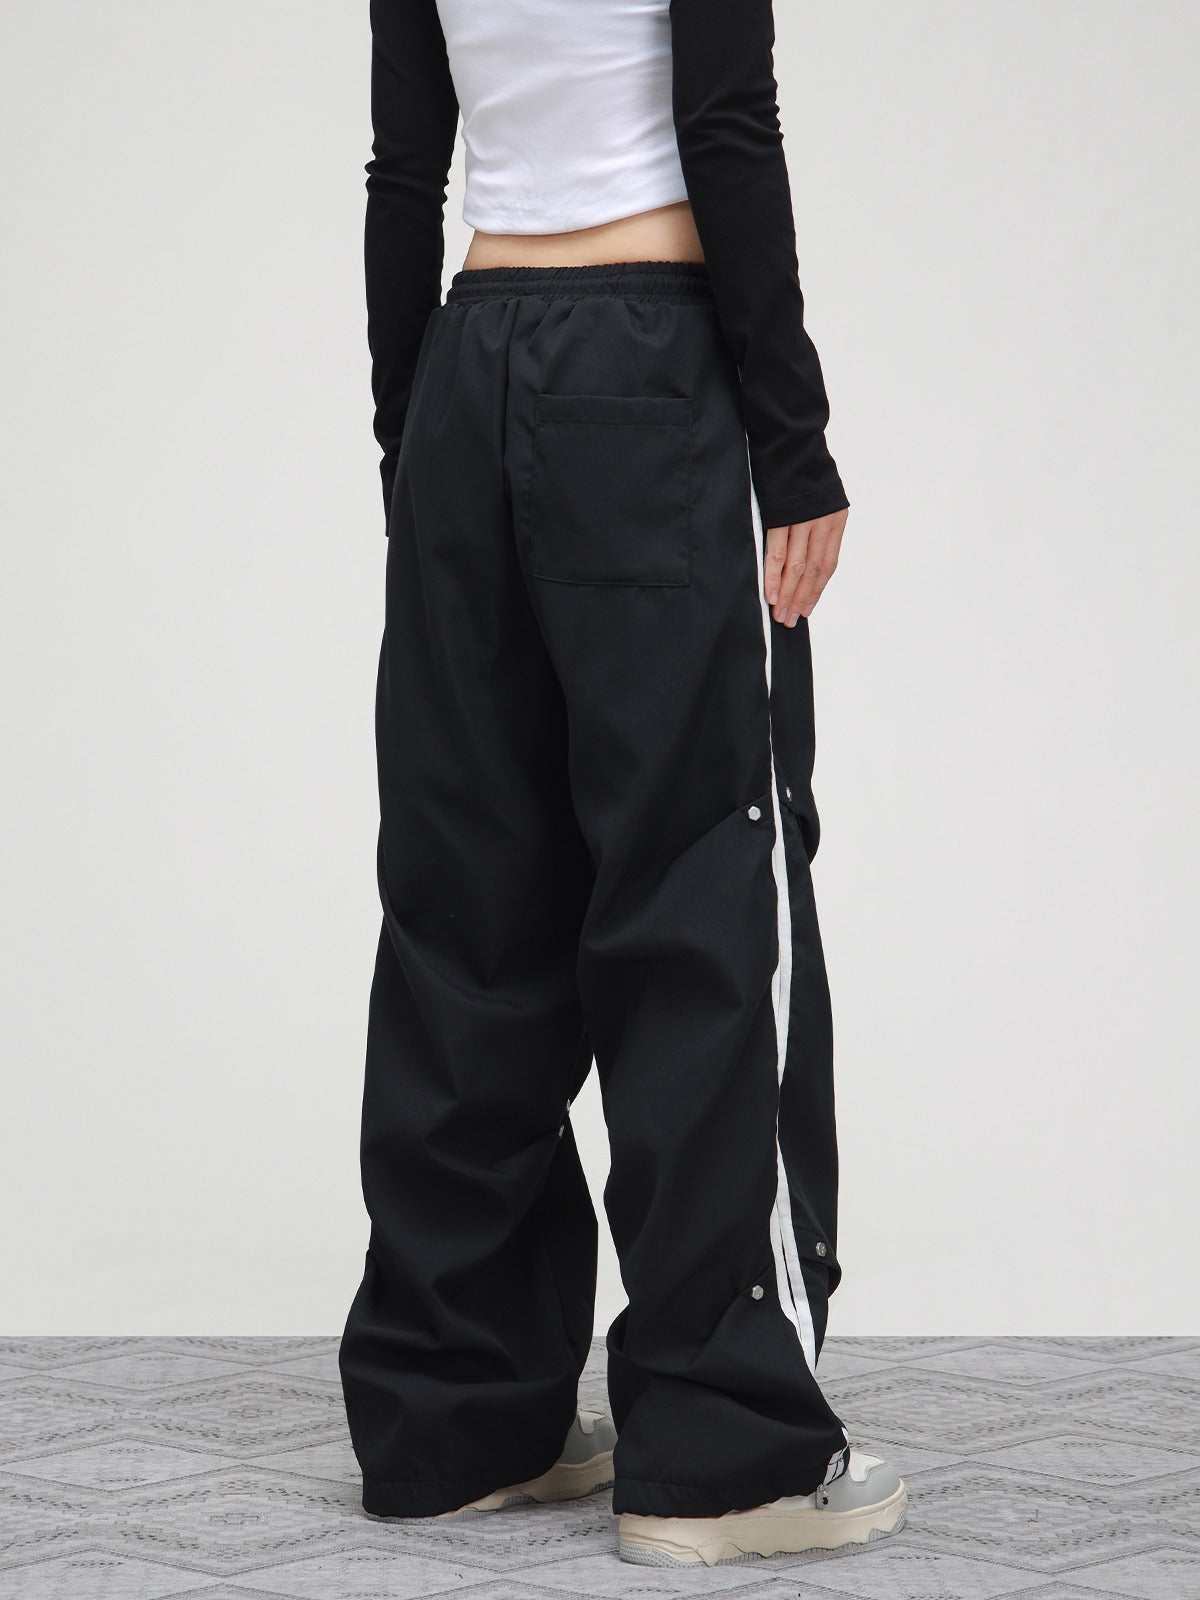 American hip-hop studded baggy sweatpants